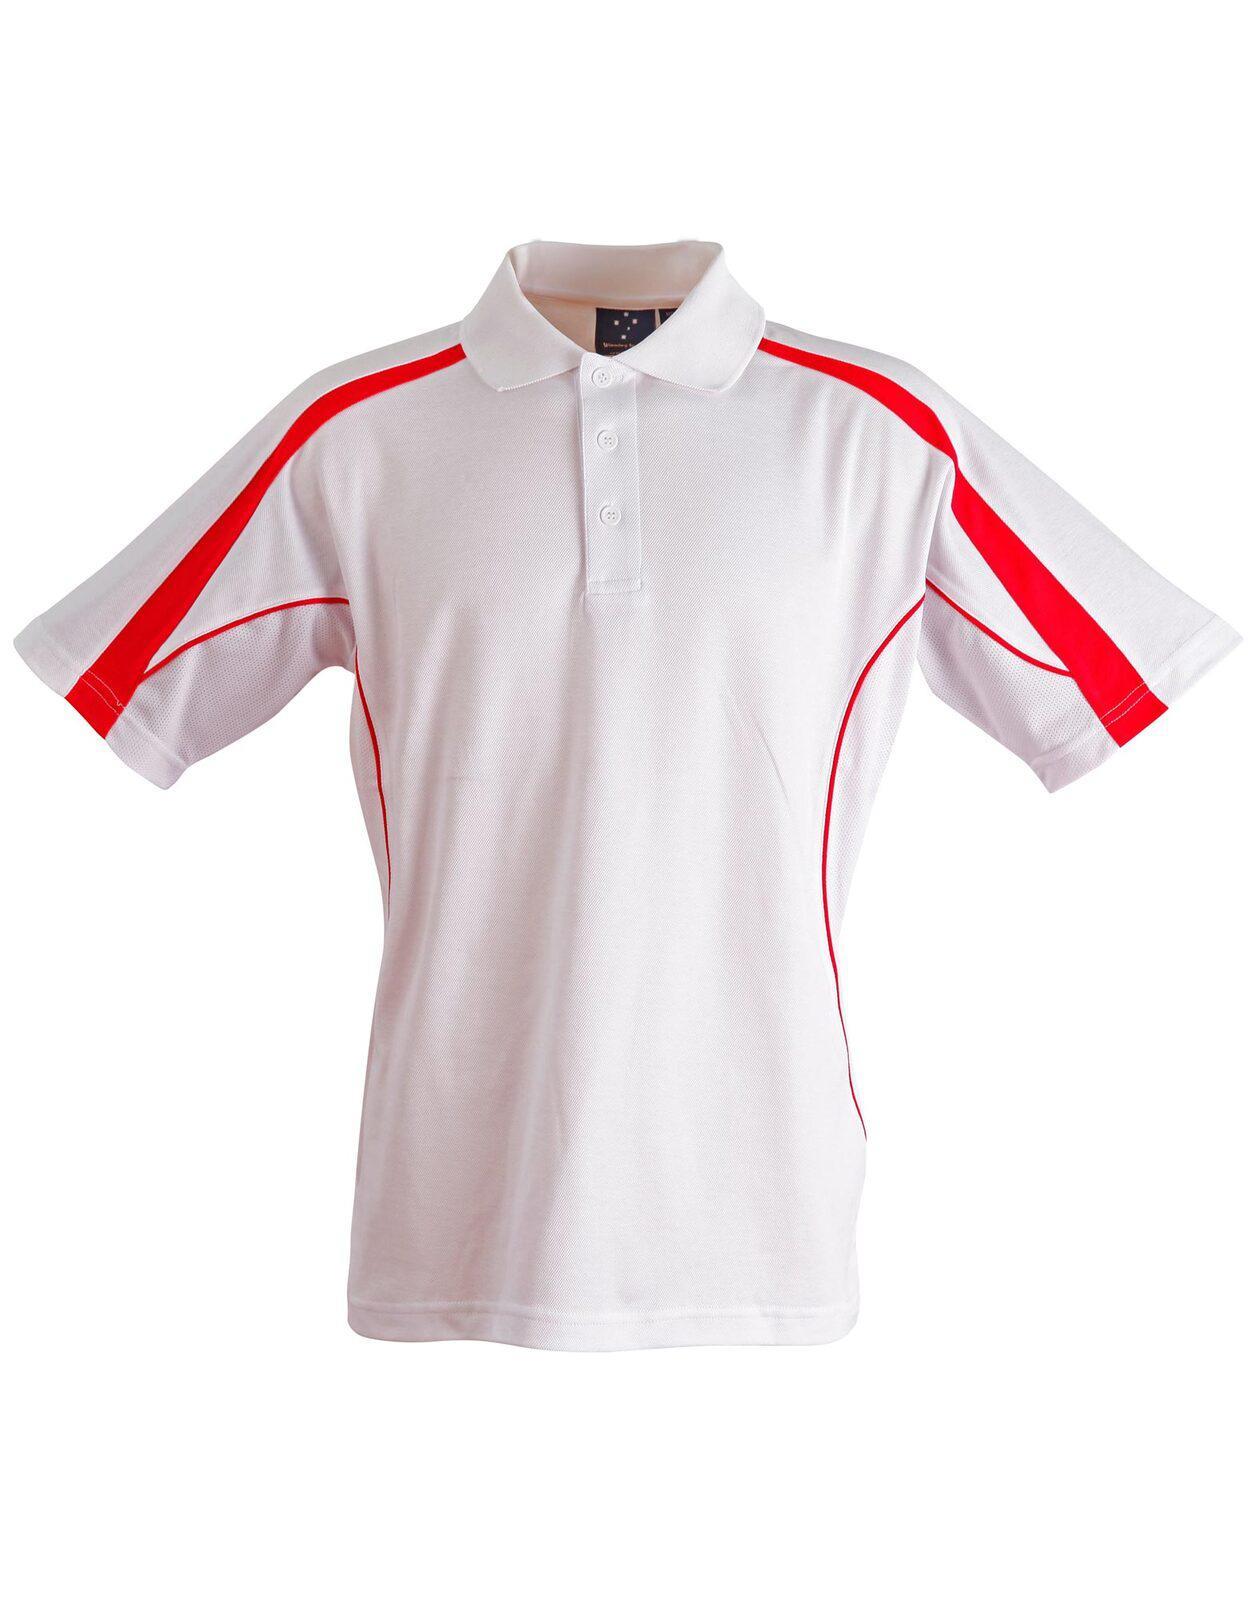 PS53K Sz 04K LEGEND Polyester Cotton Kid's Polo Shirt White/Red